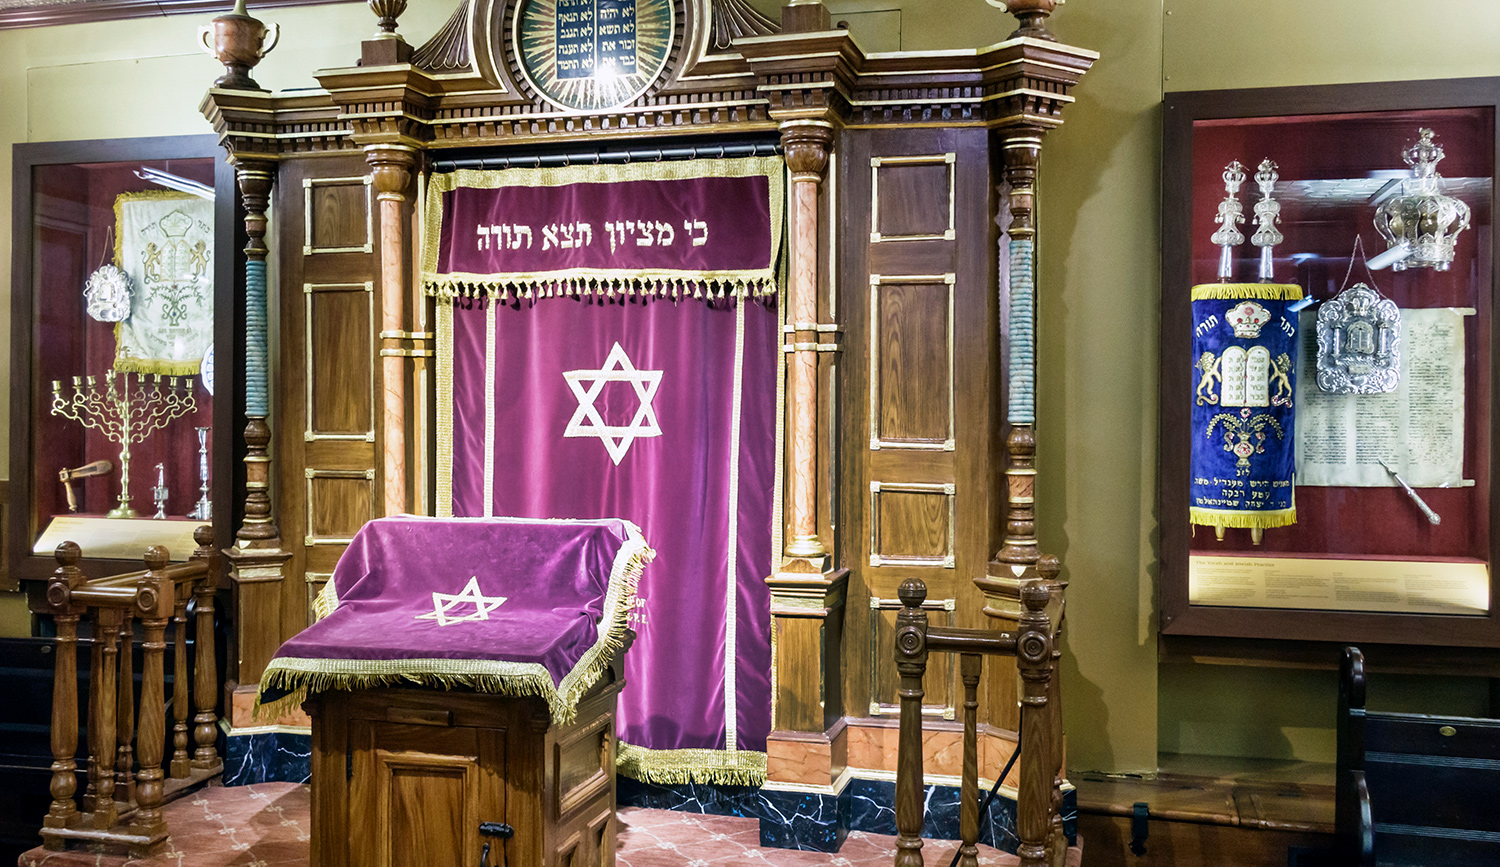 The Eldridge Street Synagogue in New York. Jeffrey Greenberg/UIG via Getty Images.
